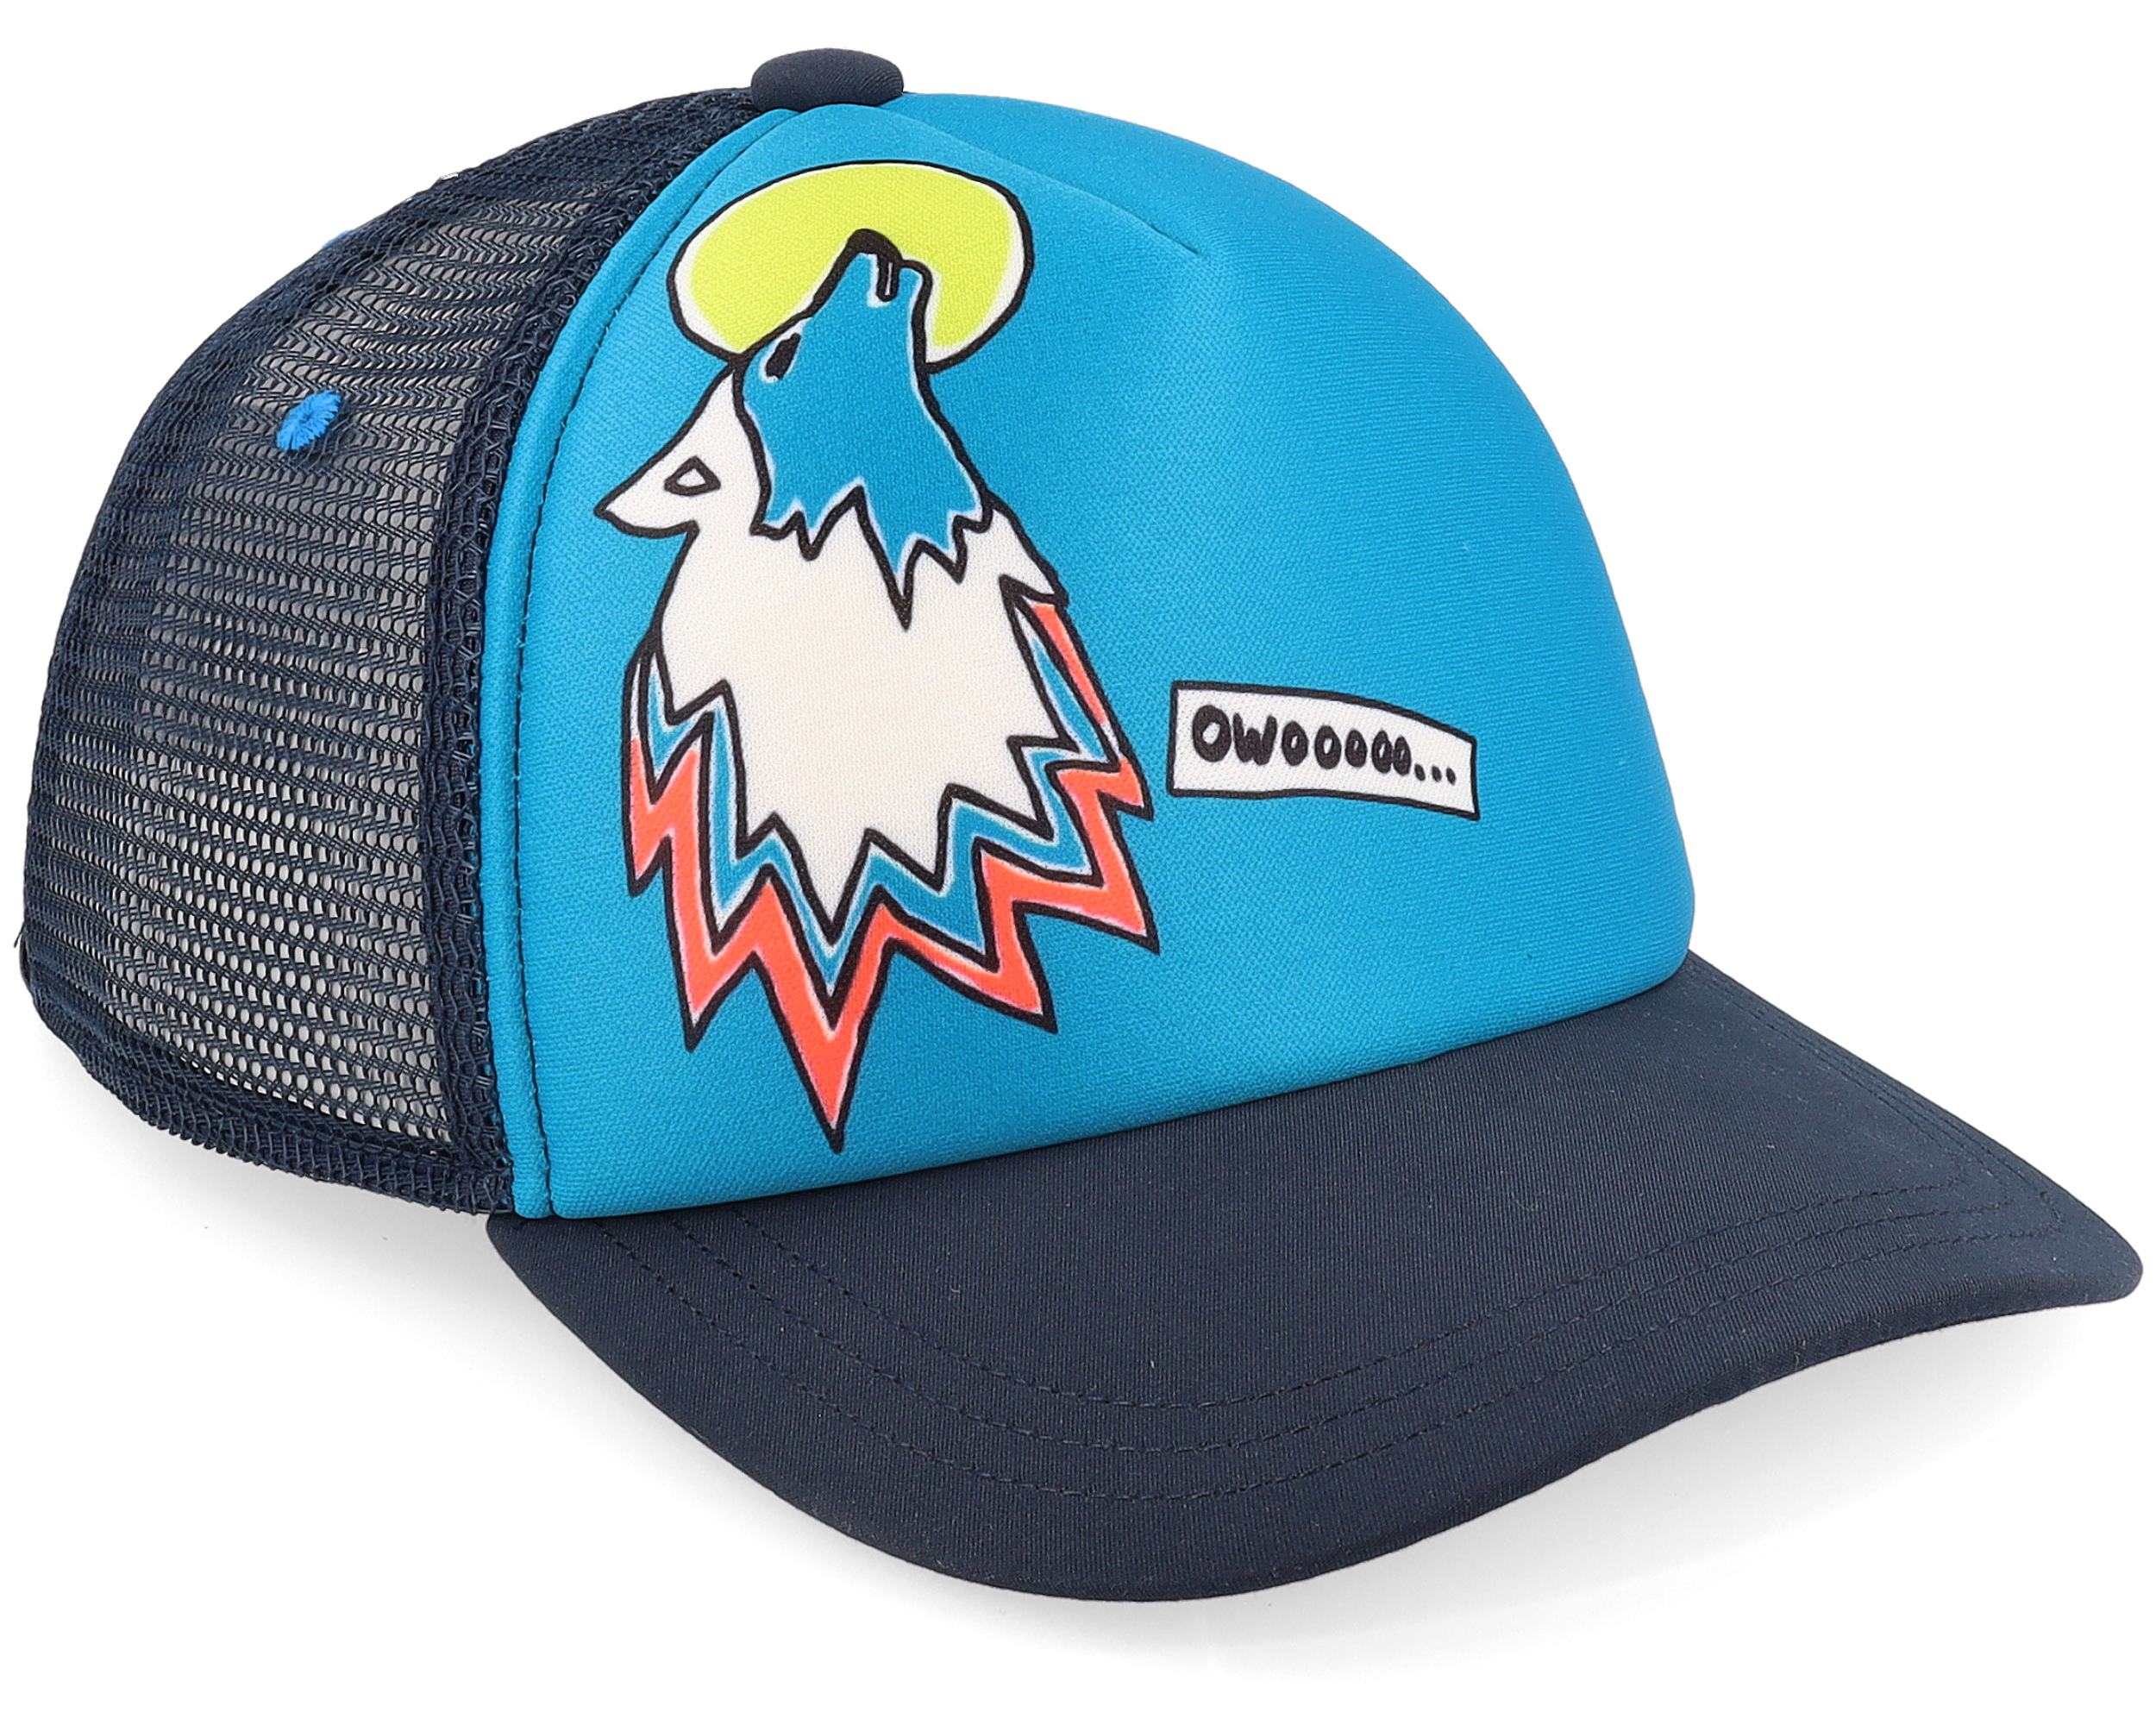 Kids Animal Mesh Cap Everest Blue Trucker - Jack Wolfskin cap